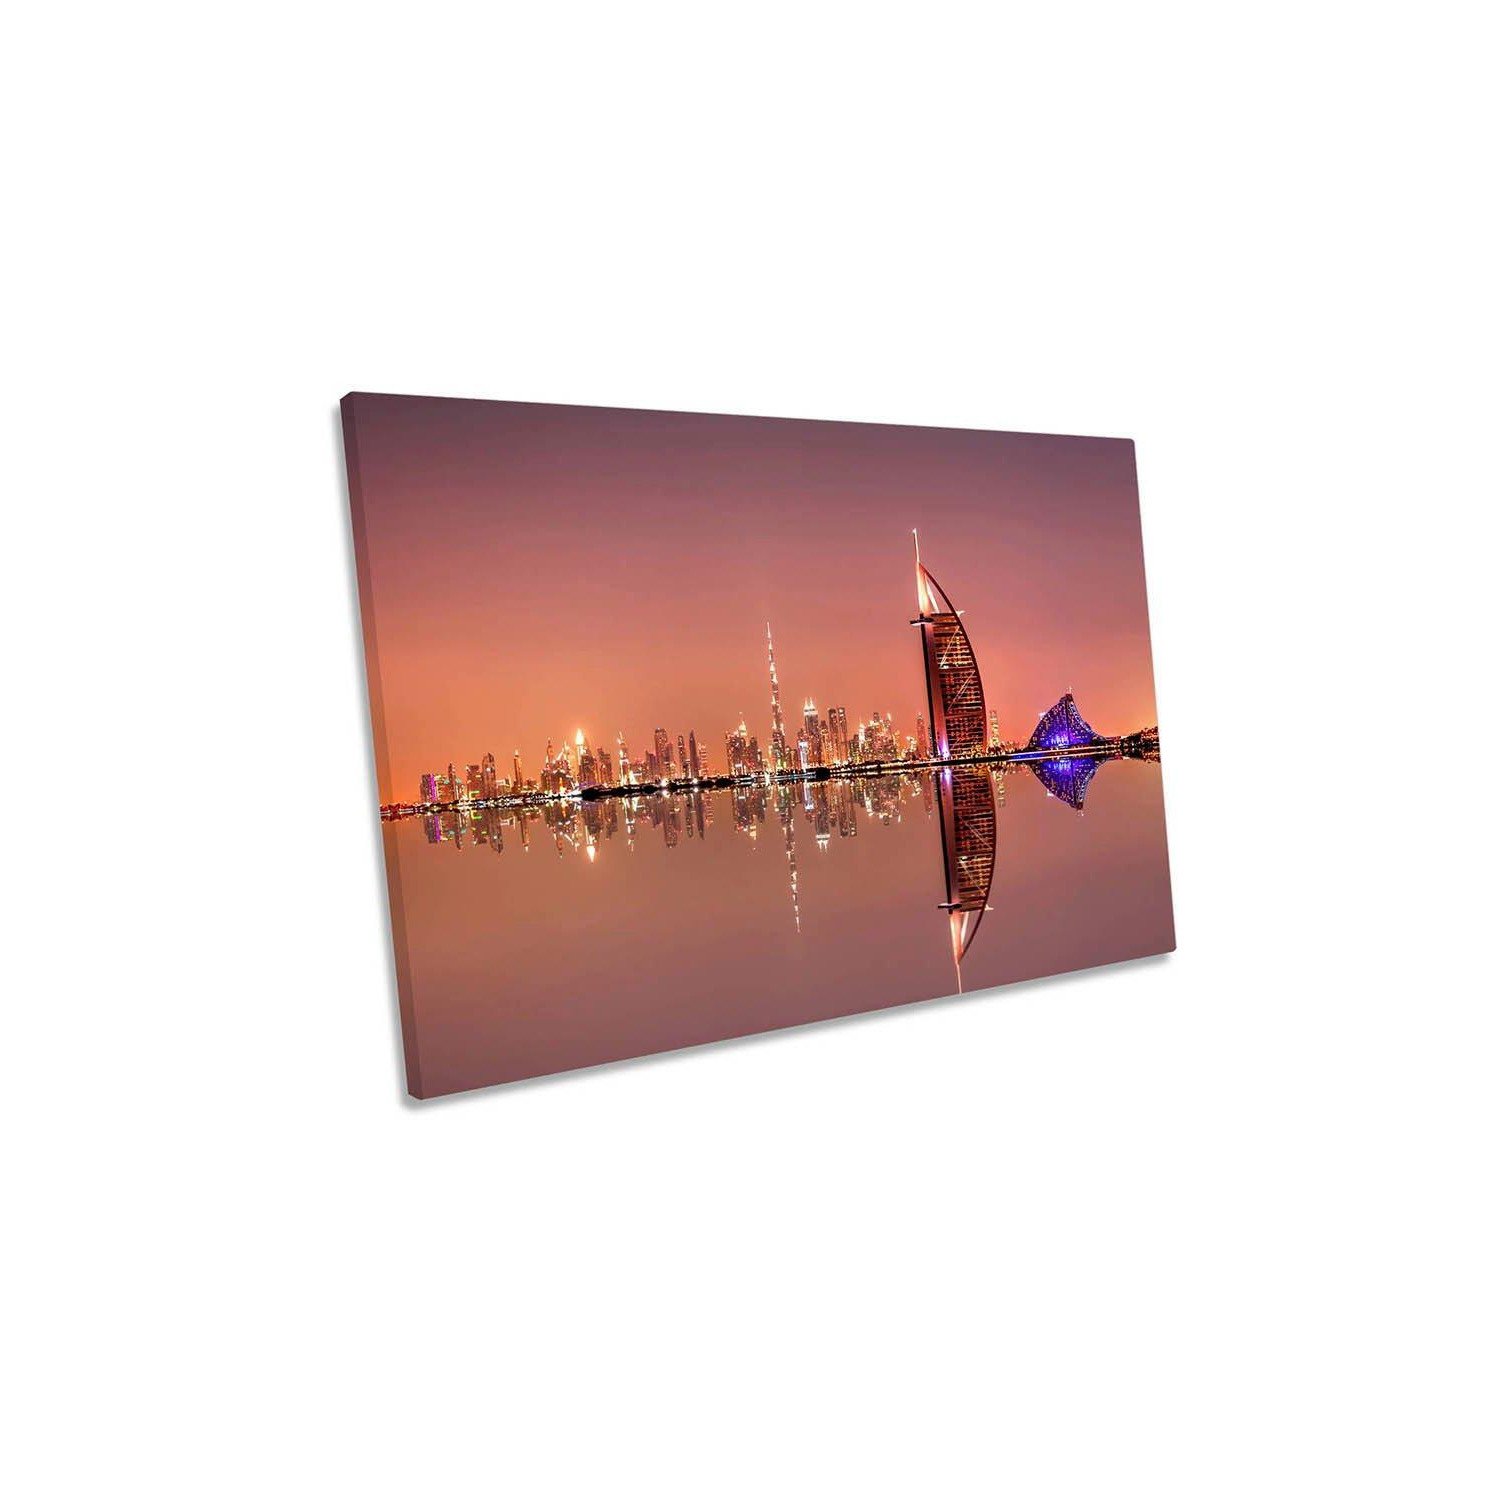 Night Colour of Dubai City Canvas Wall Art Picture Print - image 1